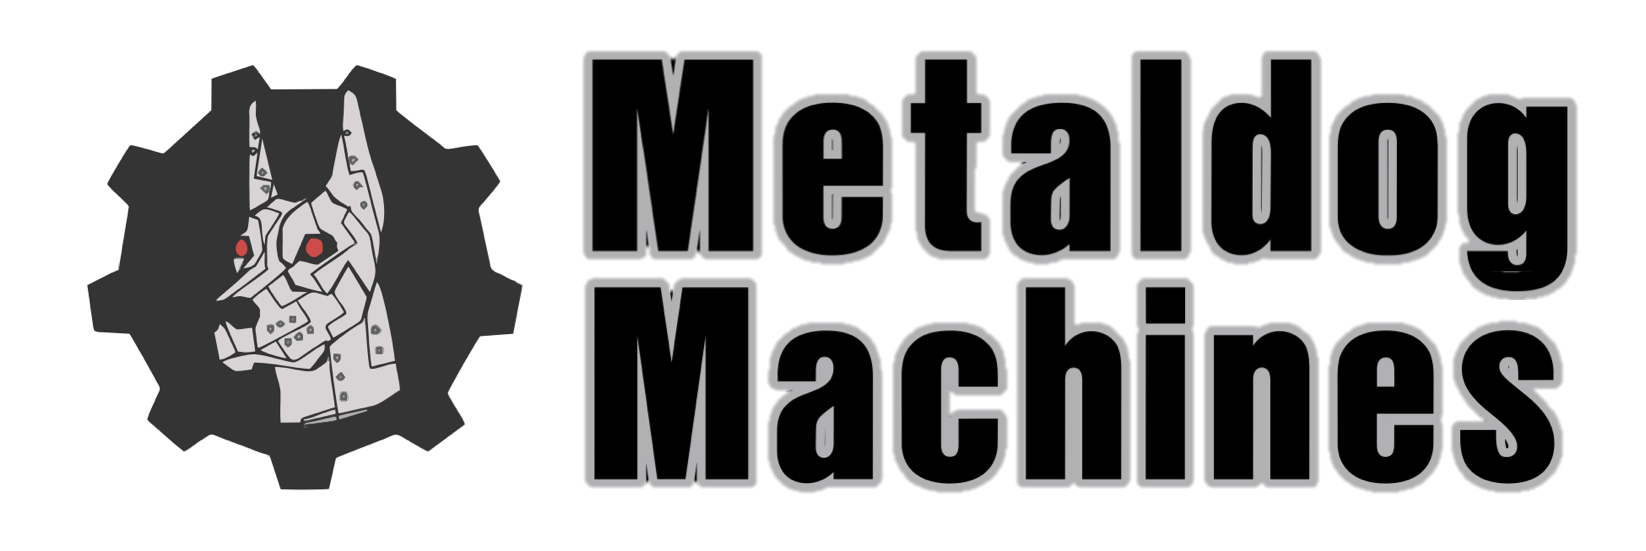 Metaldog Machines<br /><br />Call: (403) 871-2222